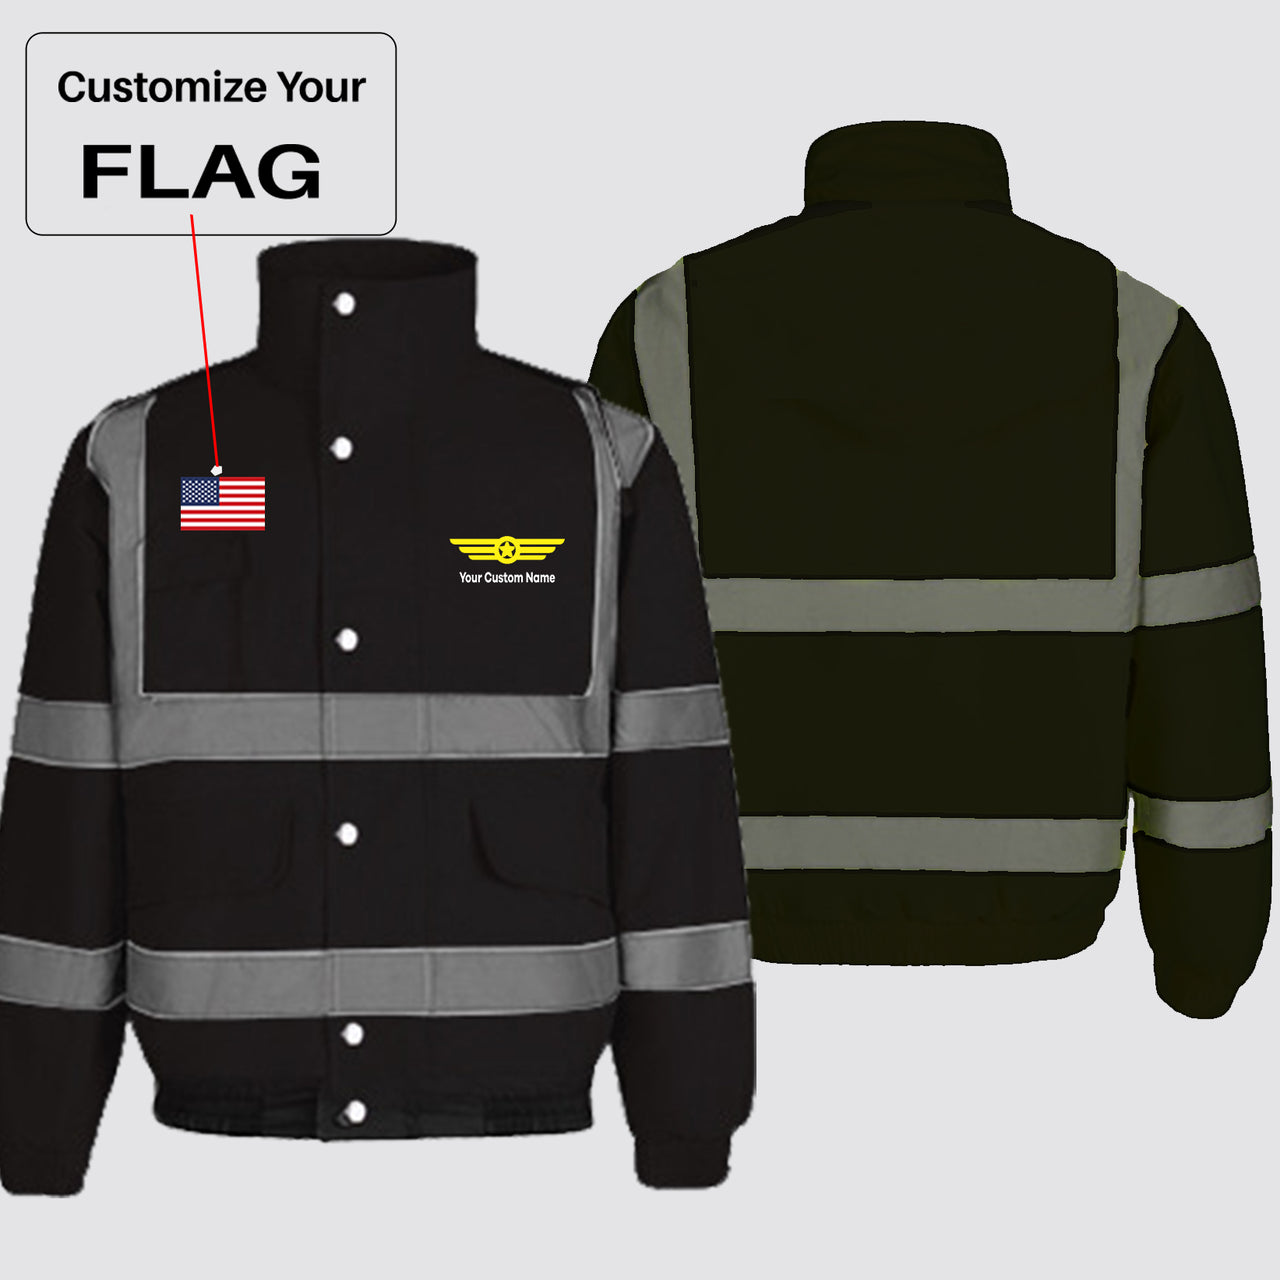 Custom Flag & Name with (Badge 6) Designed Reflective Winter Jackets